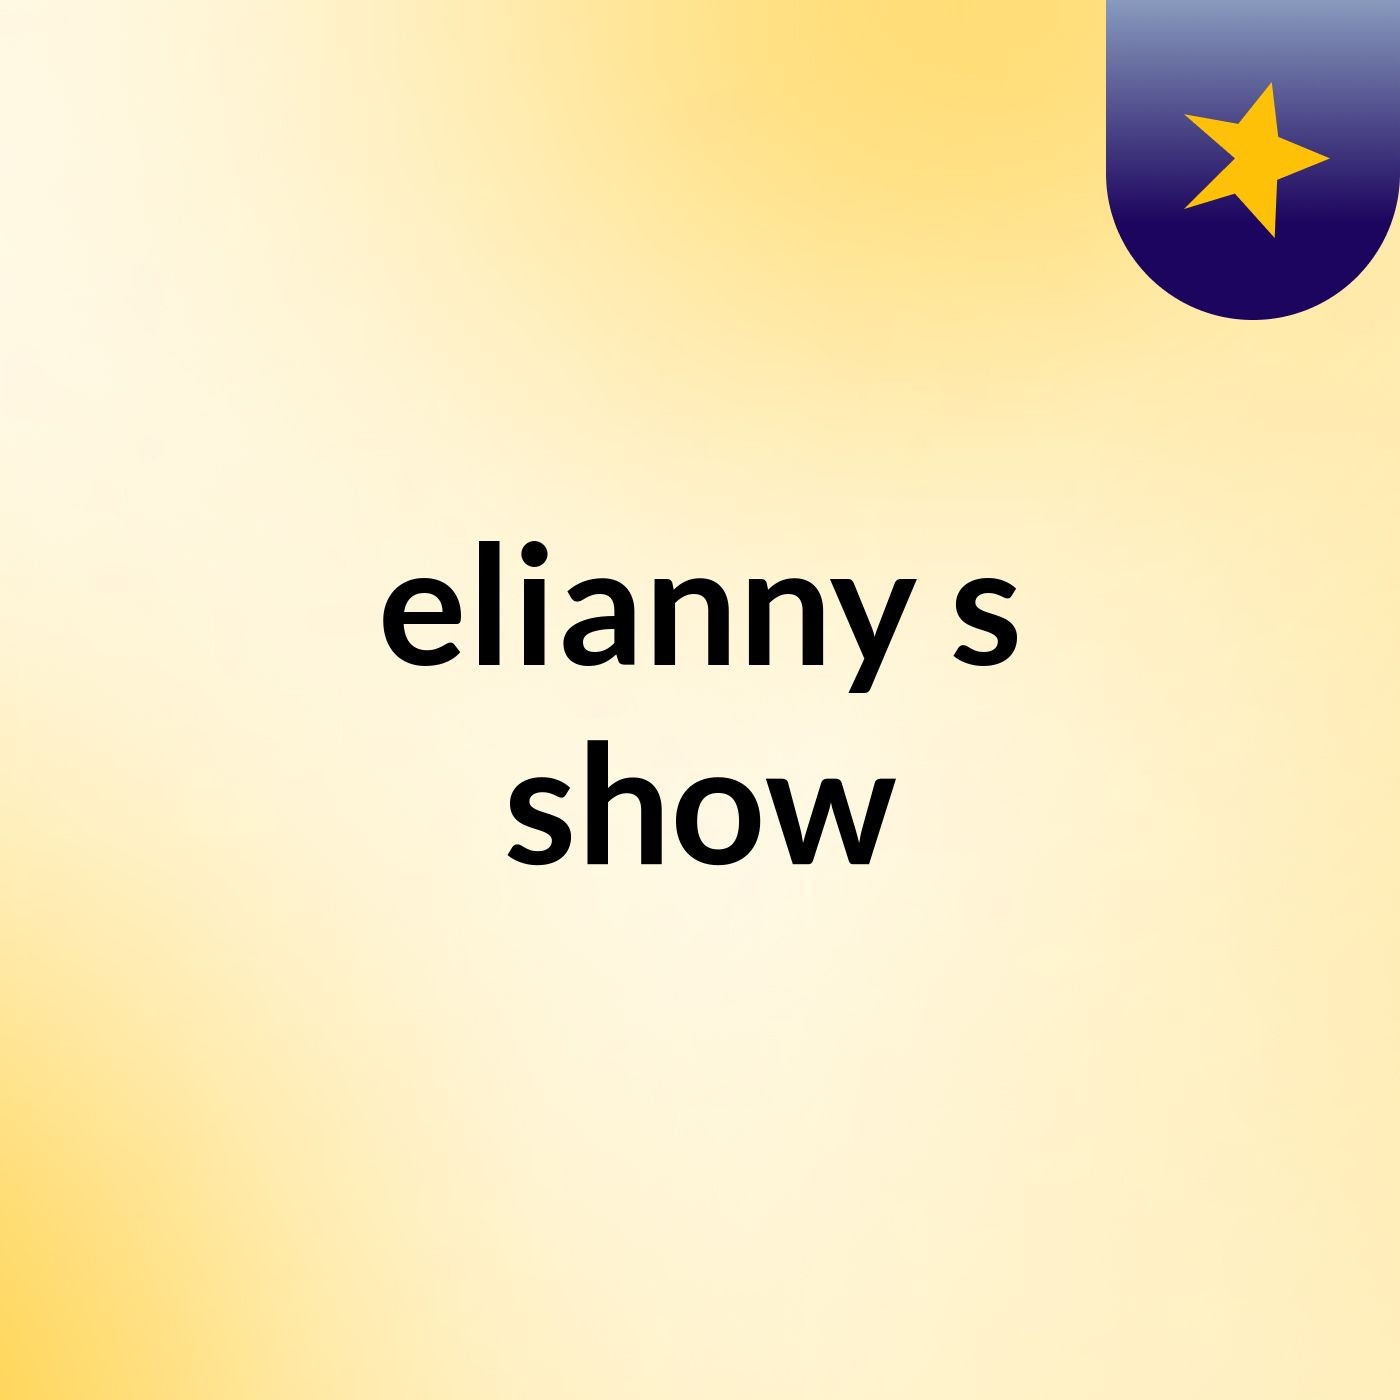 elianny's show